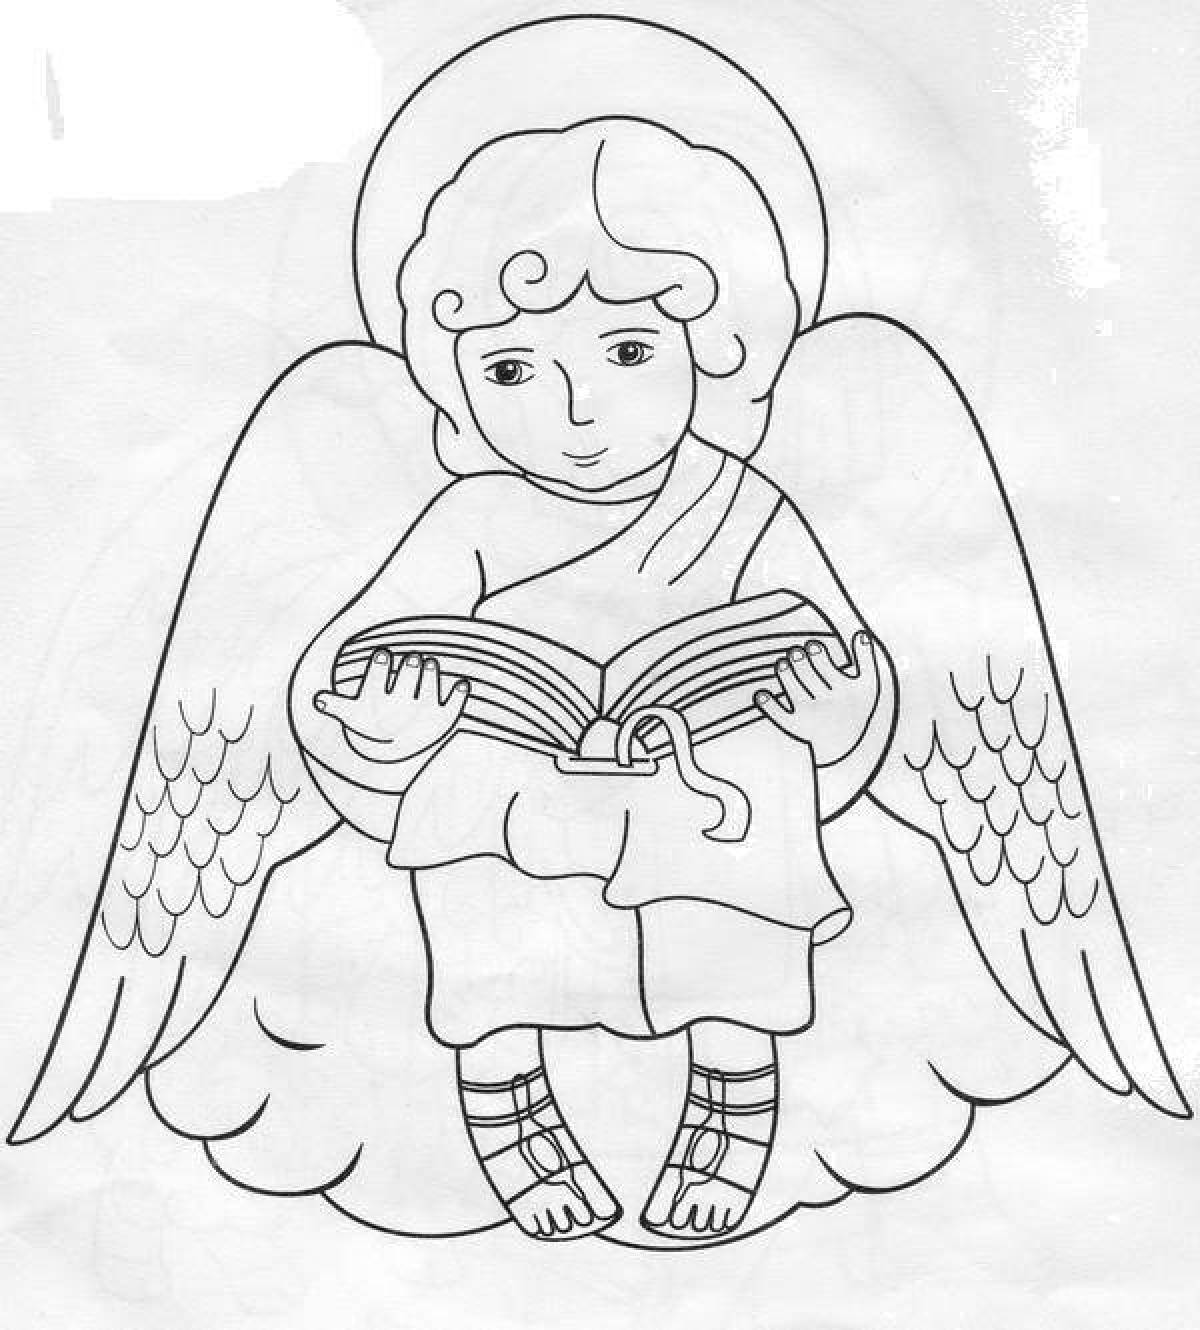 Divine coloring angel for children